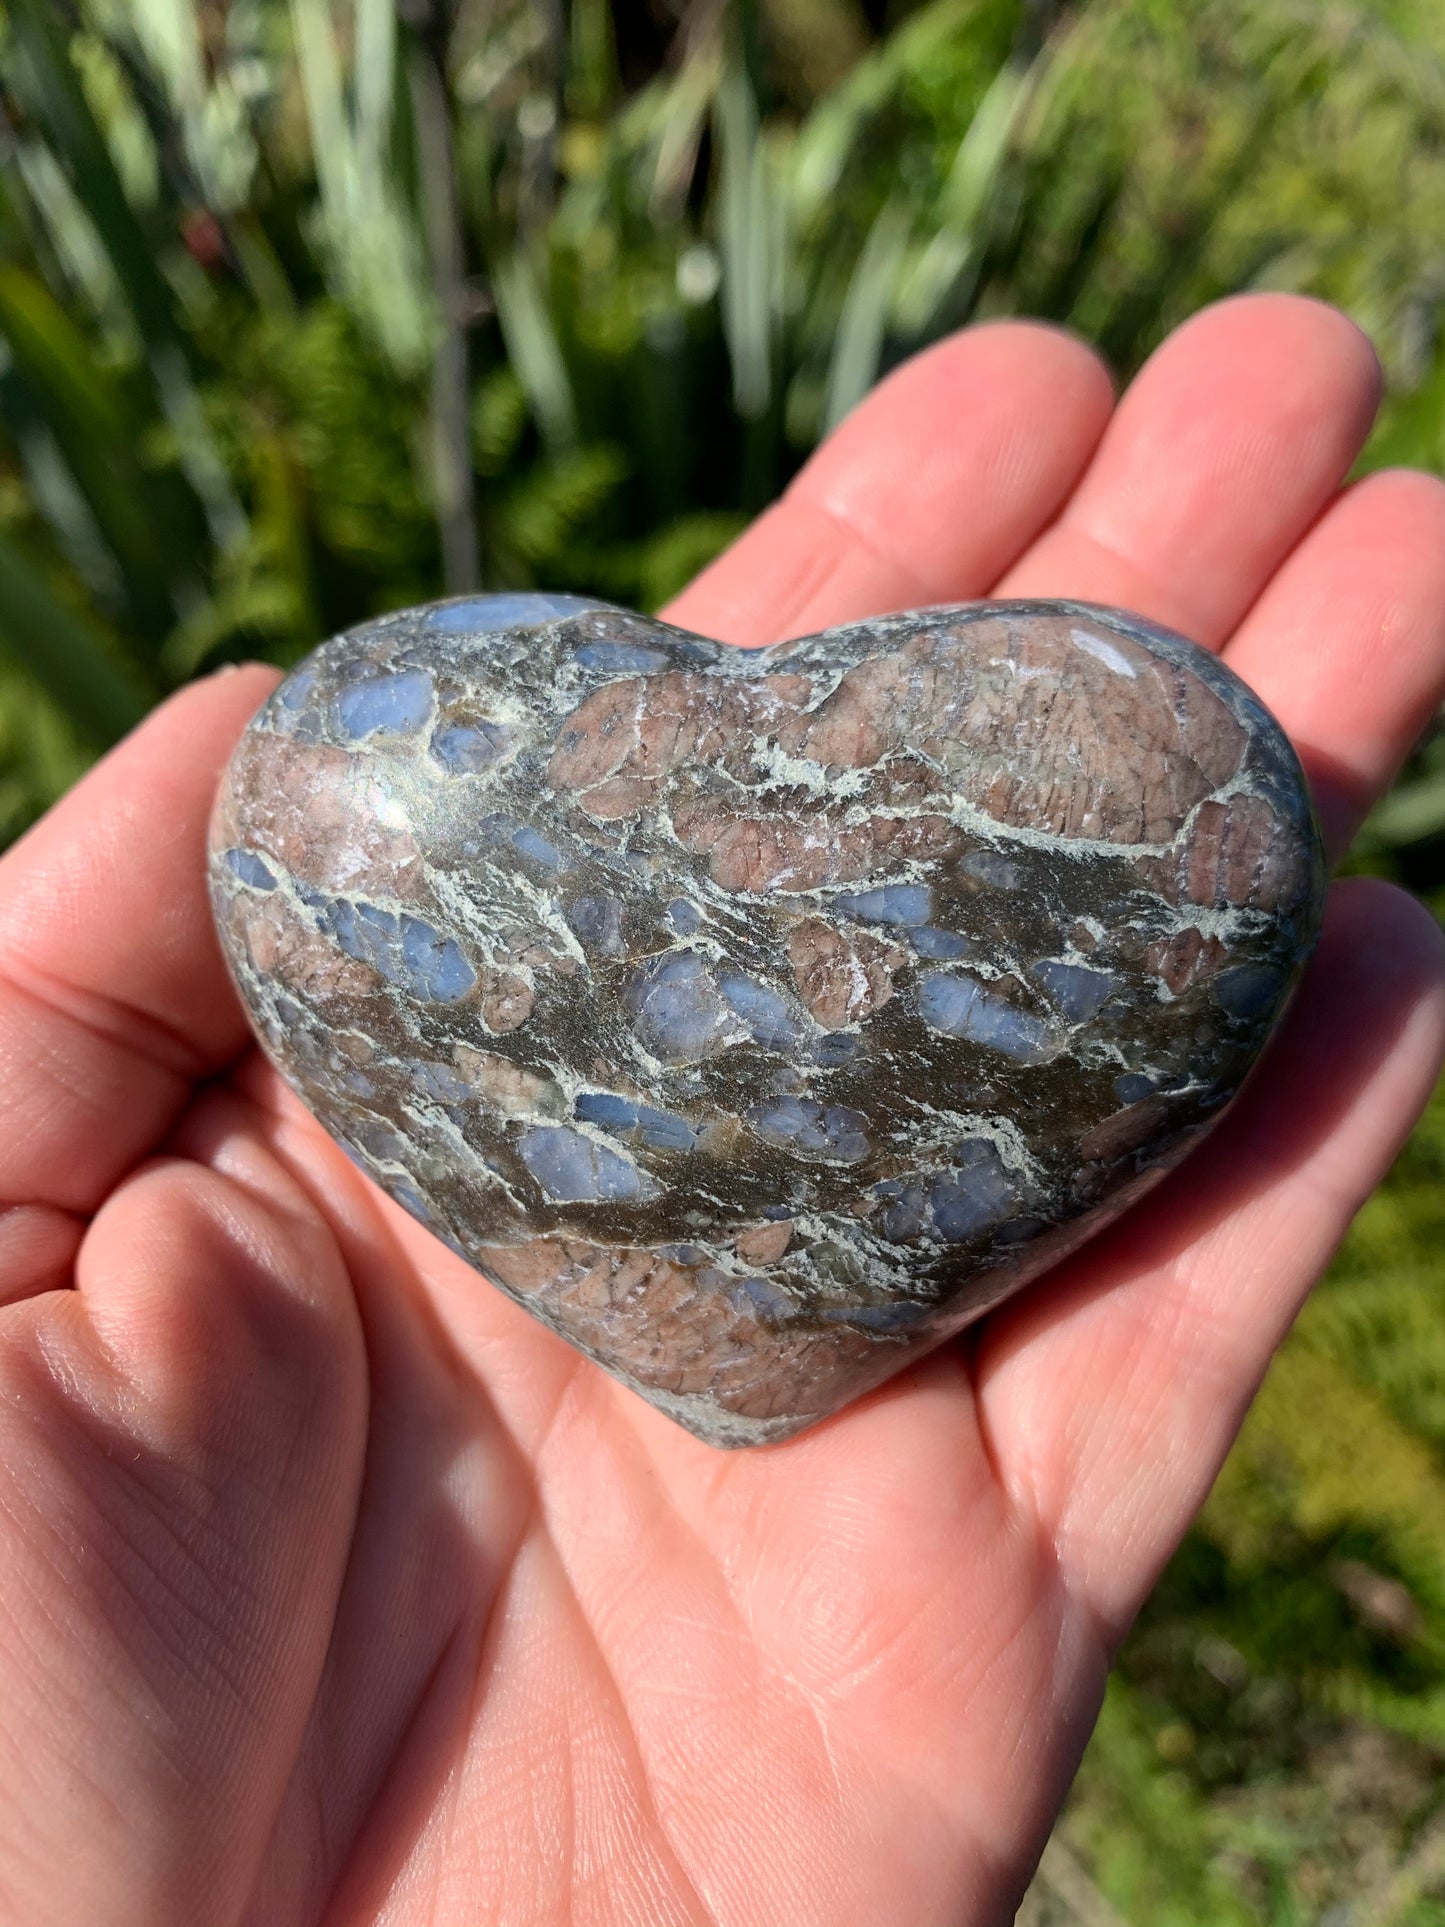 Llianite/Que Sera Stone Heart